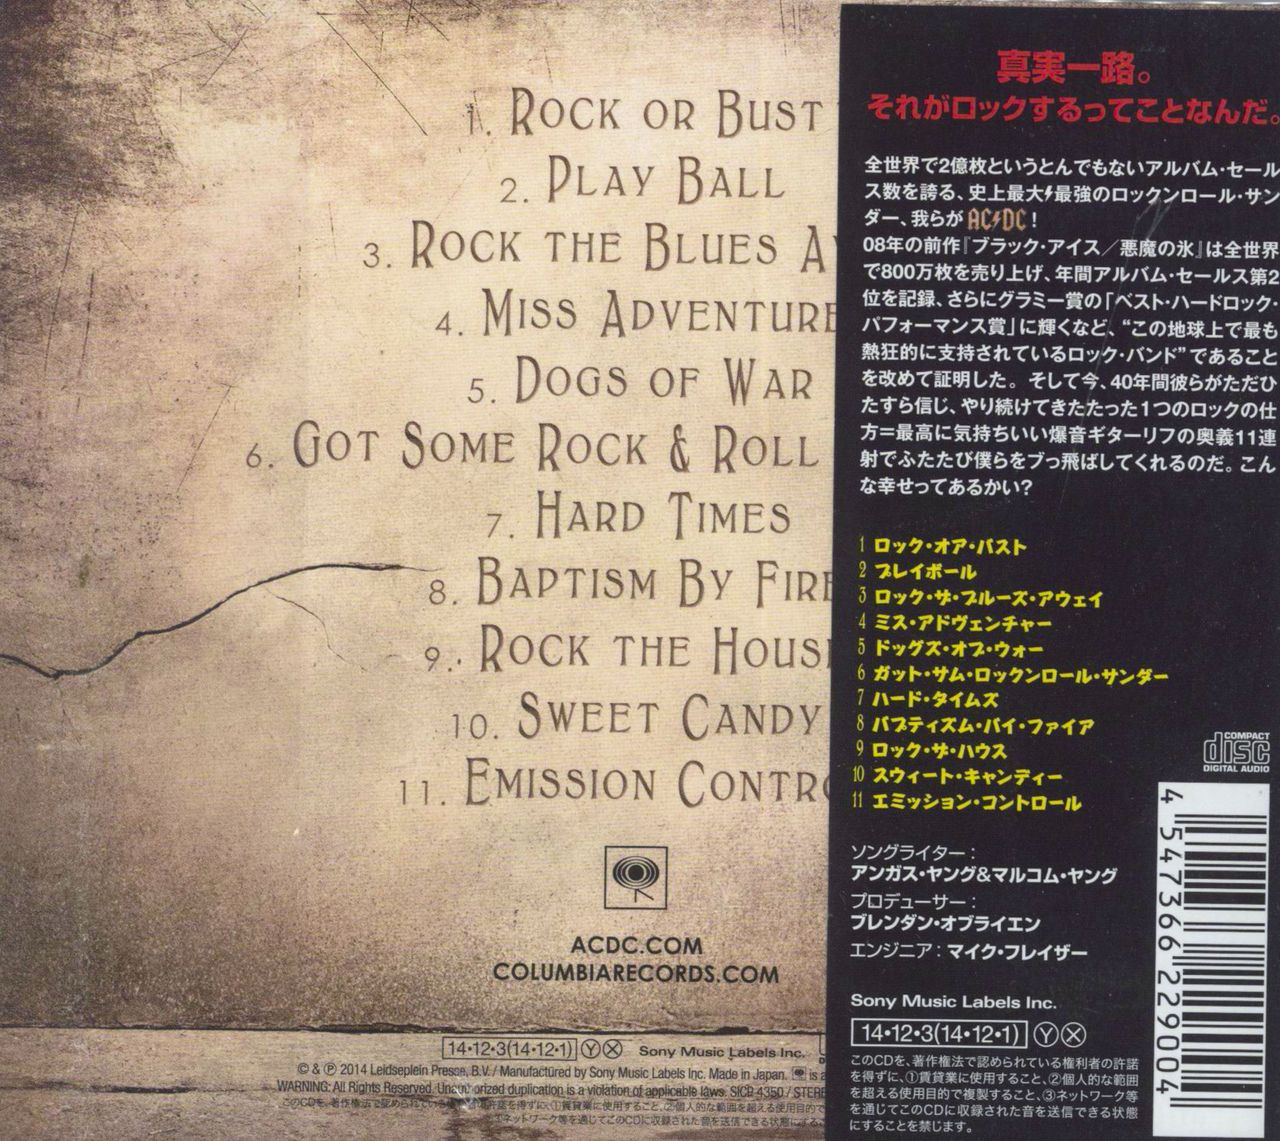 Or Bust - Lenticular Japanese CD album —